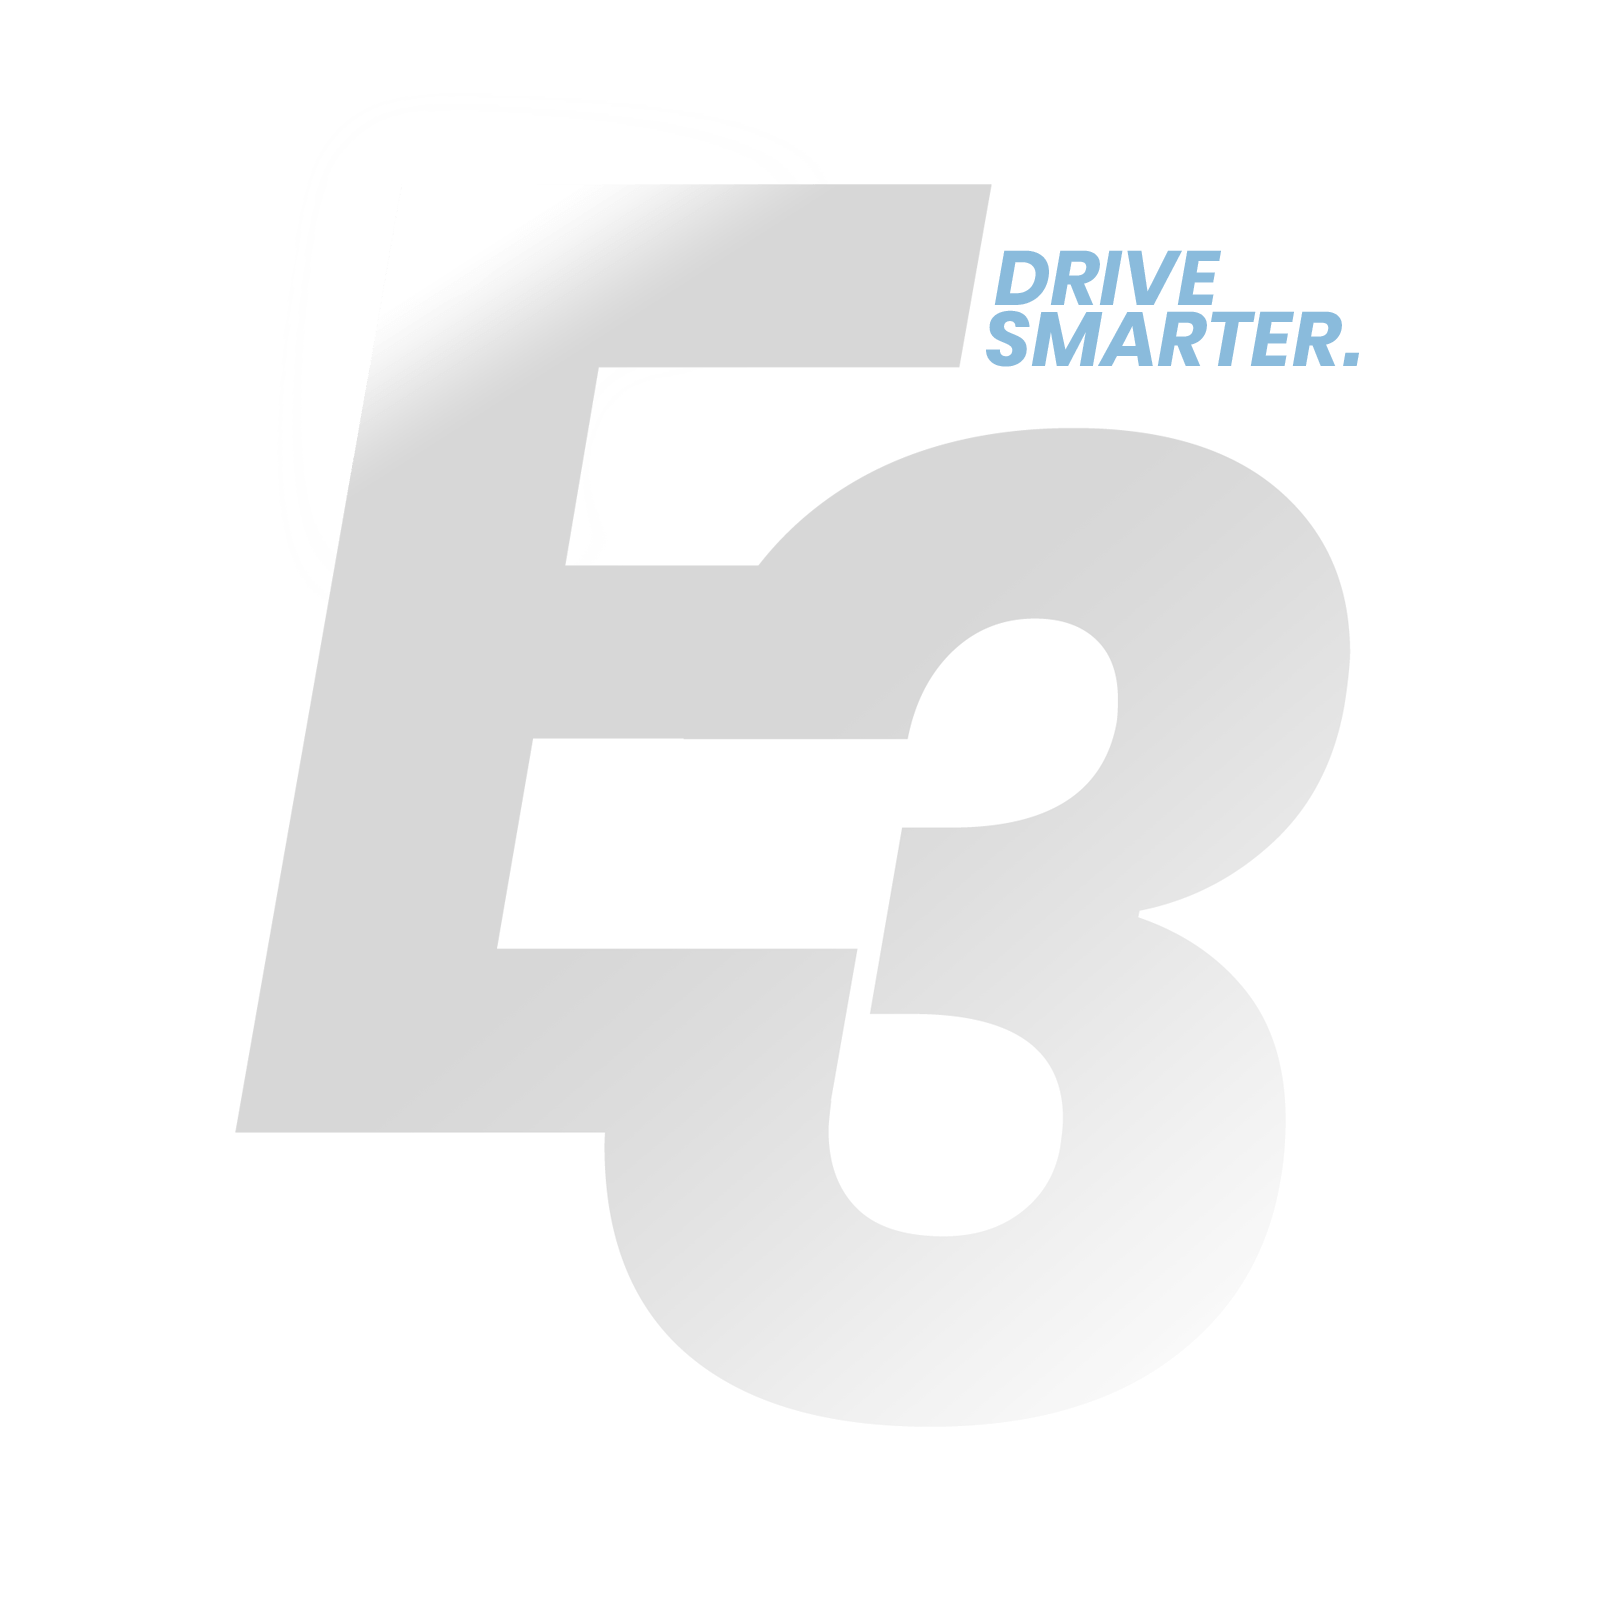 Eee Logo - EEE Innovations Oy - Drive smarter.